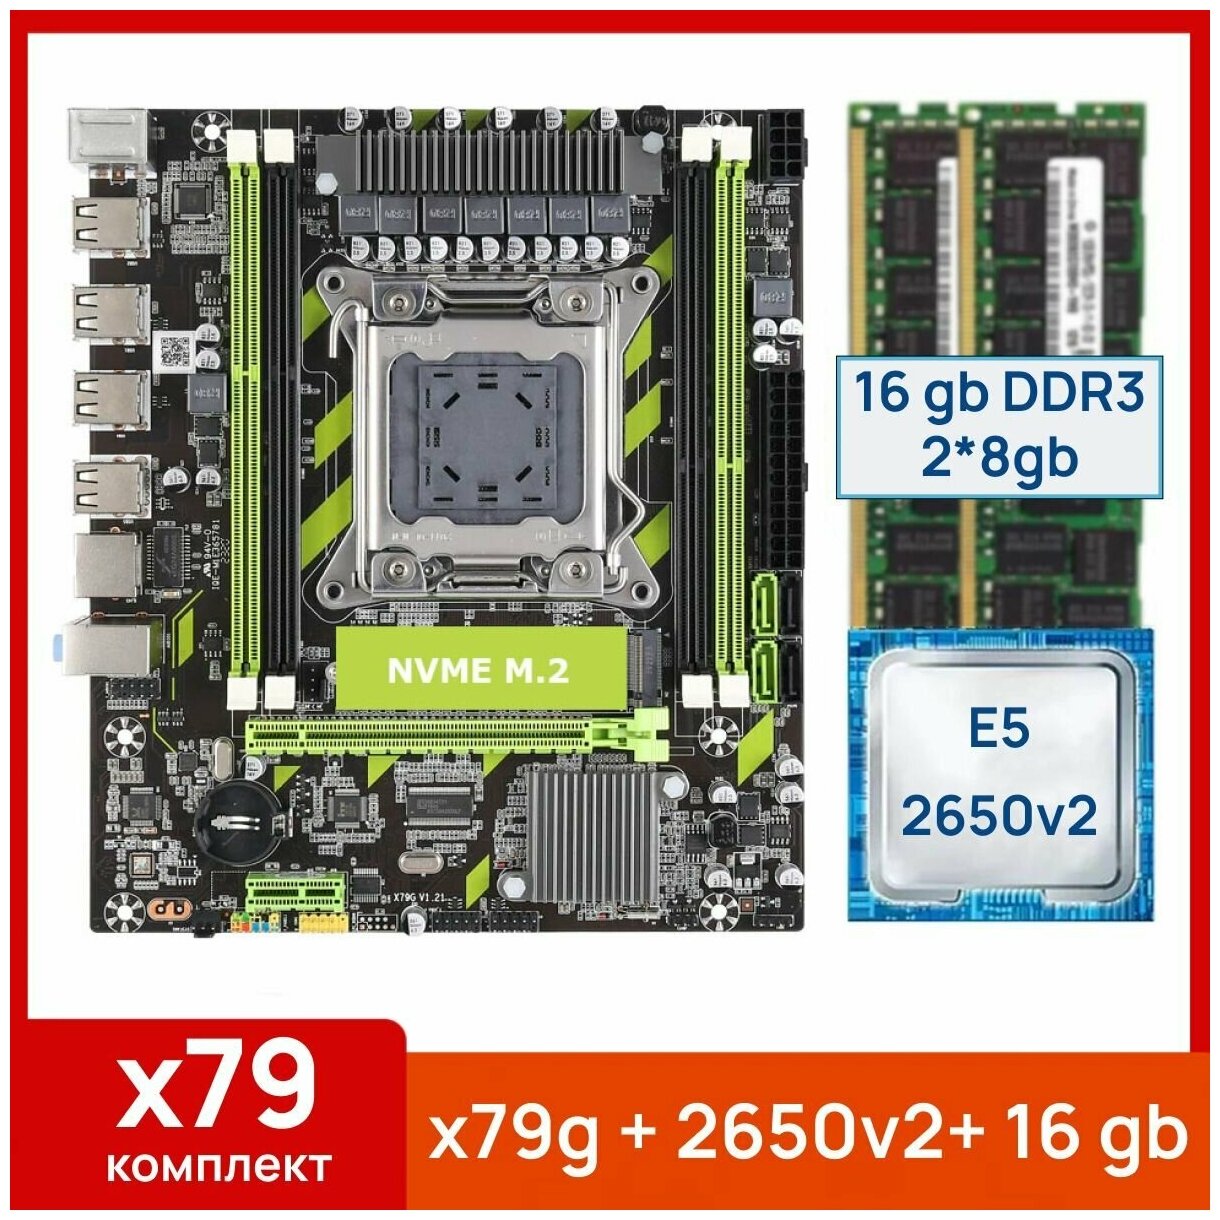 Комплект: Atermiter x79g + Xeon E5 2650v2 + 16 gb(2x8gb) DDR3 ecc reg